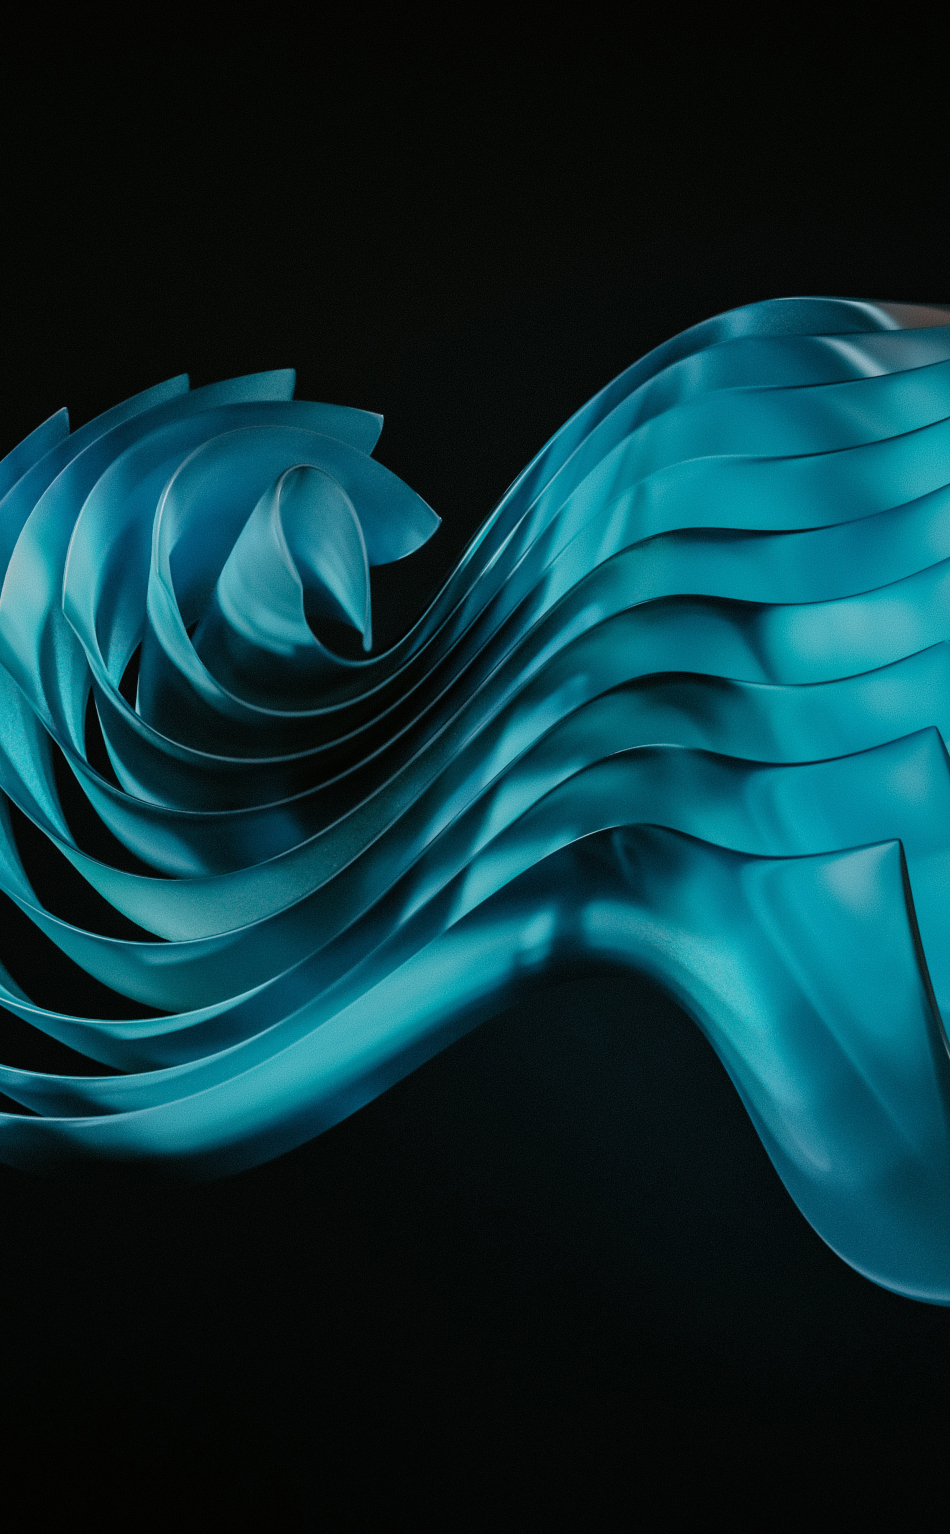 Jellyfish like shape, abstract, wavey sheets, 950x1534 wallpaper